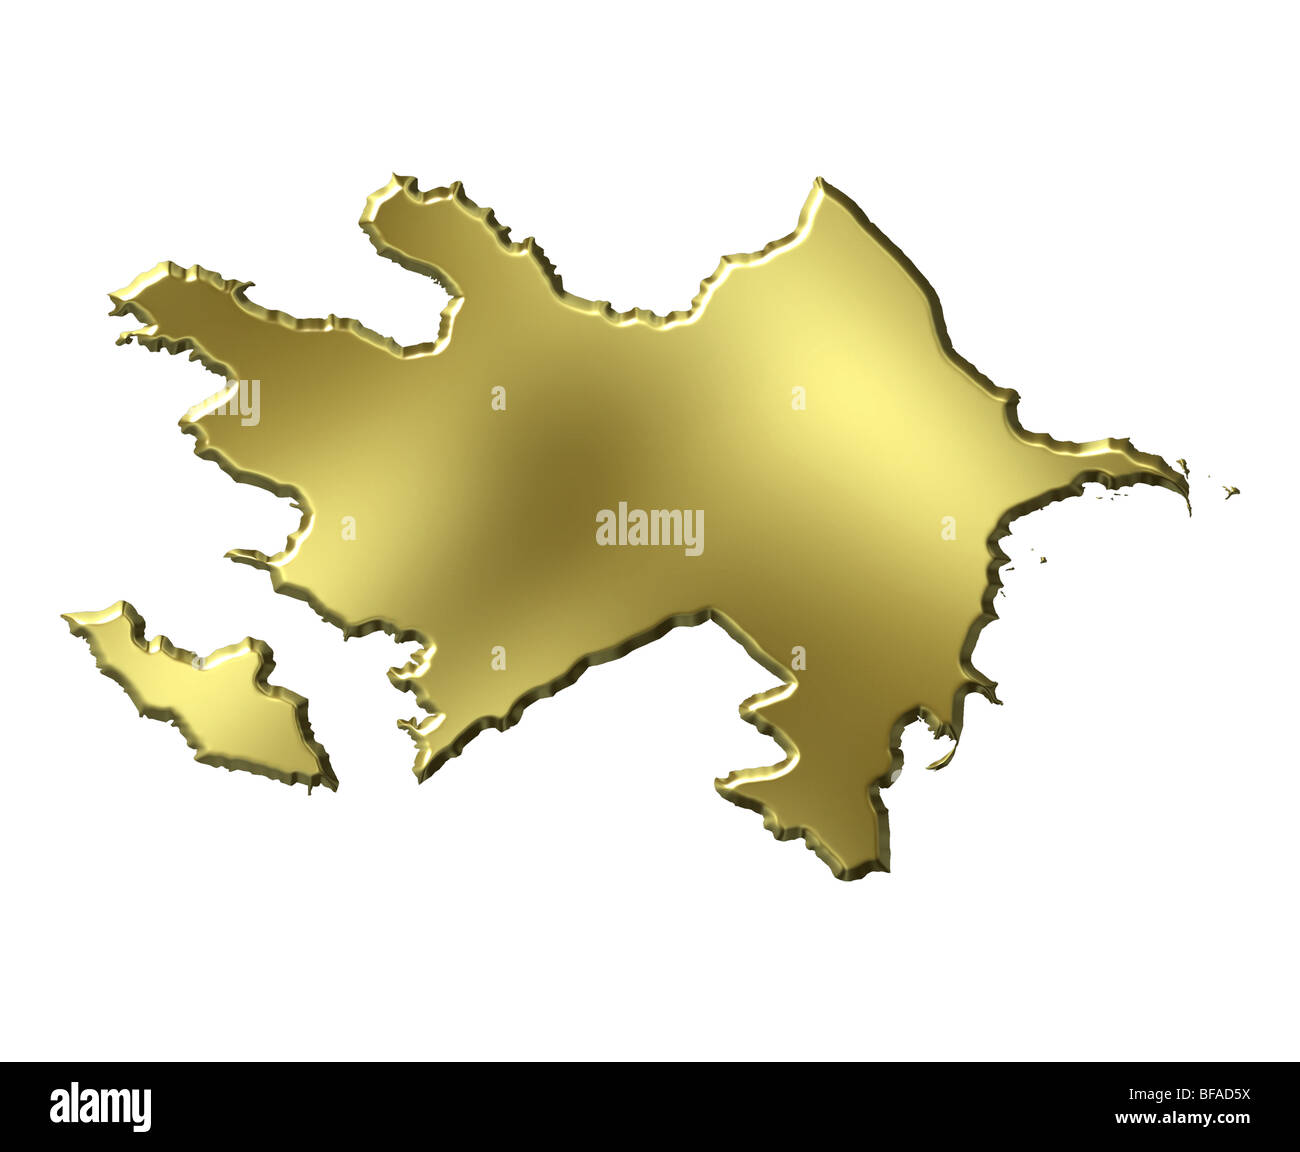 Azerbaijan 3d golden map Stock Photo